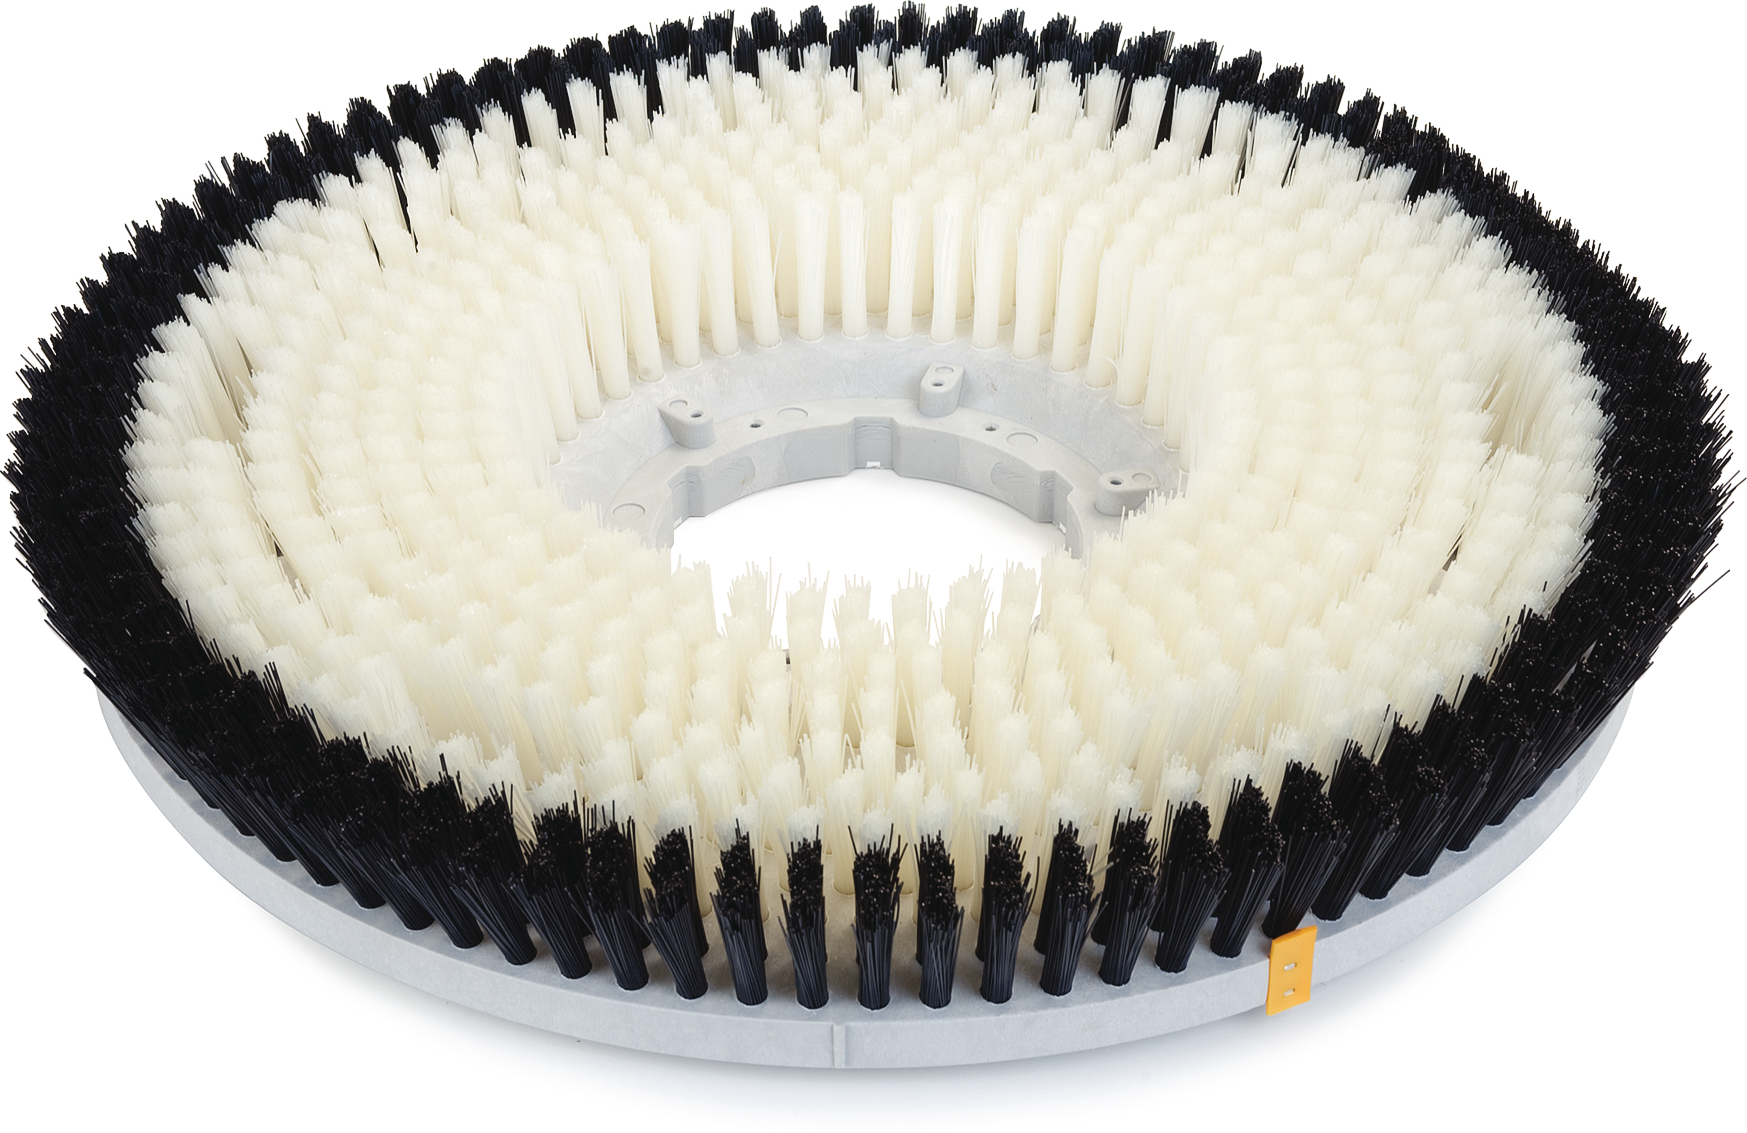 Colortech White-Black Karpet Kare Nylon Brush 15 - White-Black